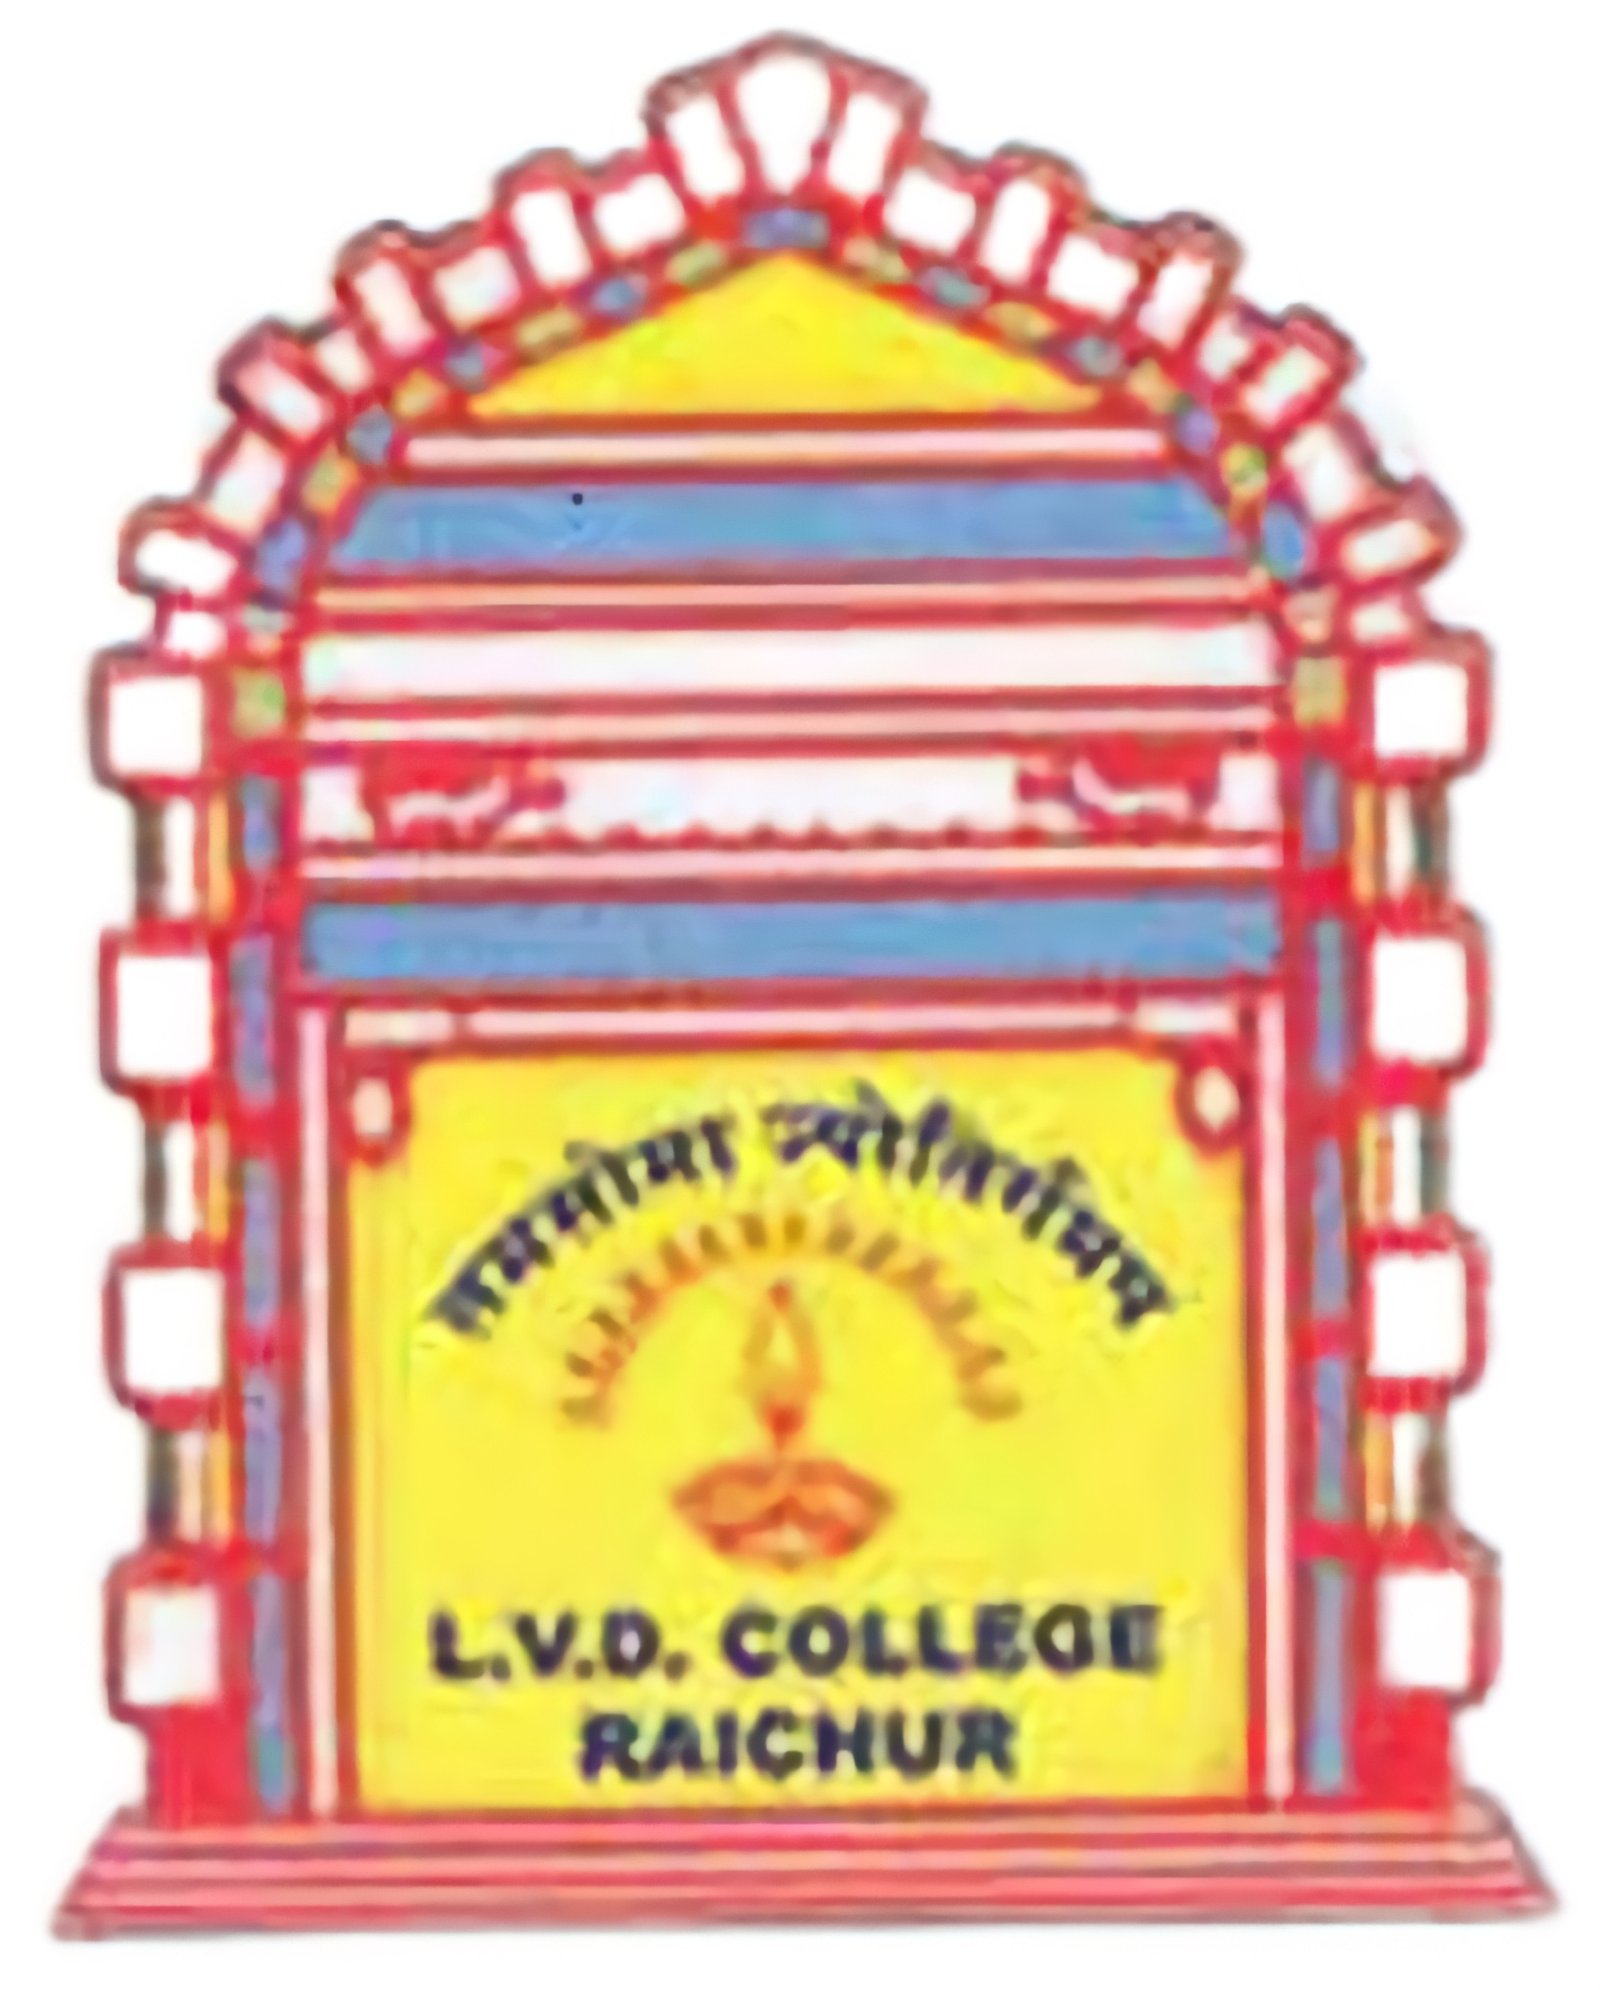 LVD college logo